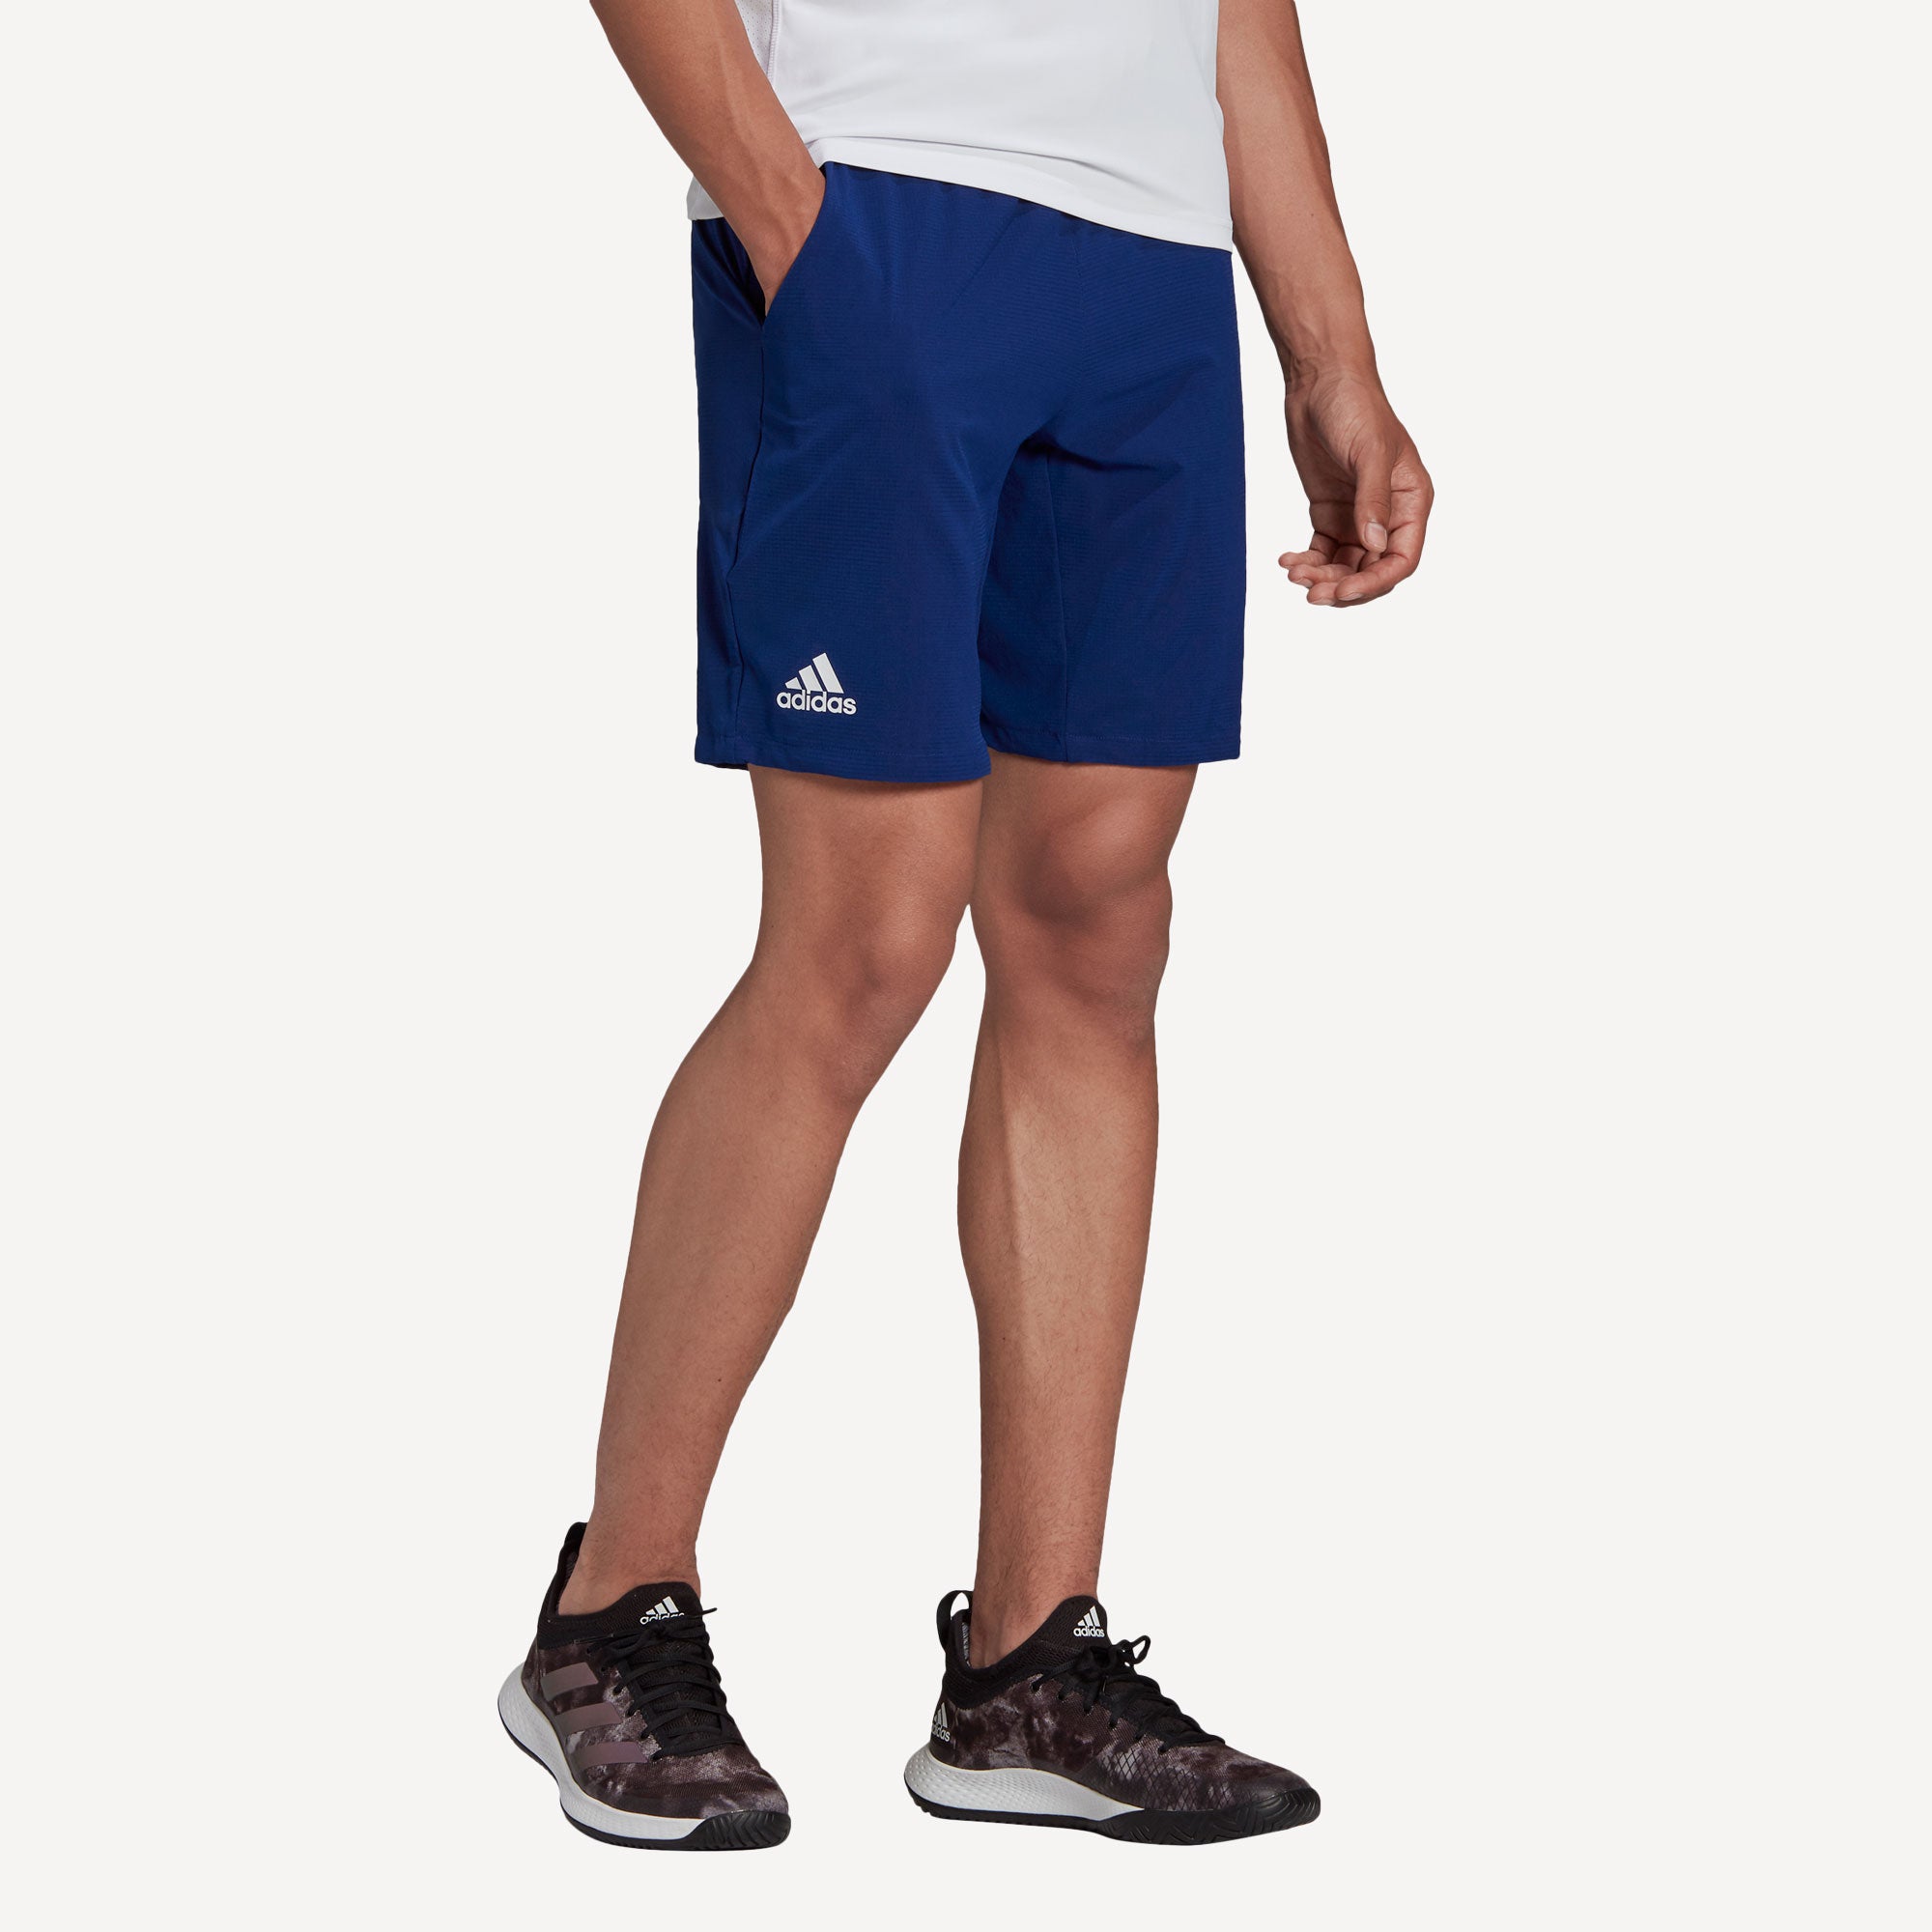 adidas Ergo Men's 7-Inch Tennis Shorts Blue (1)